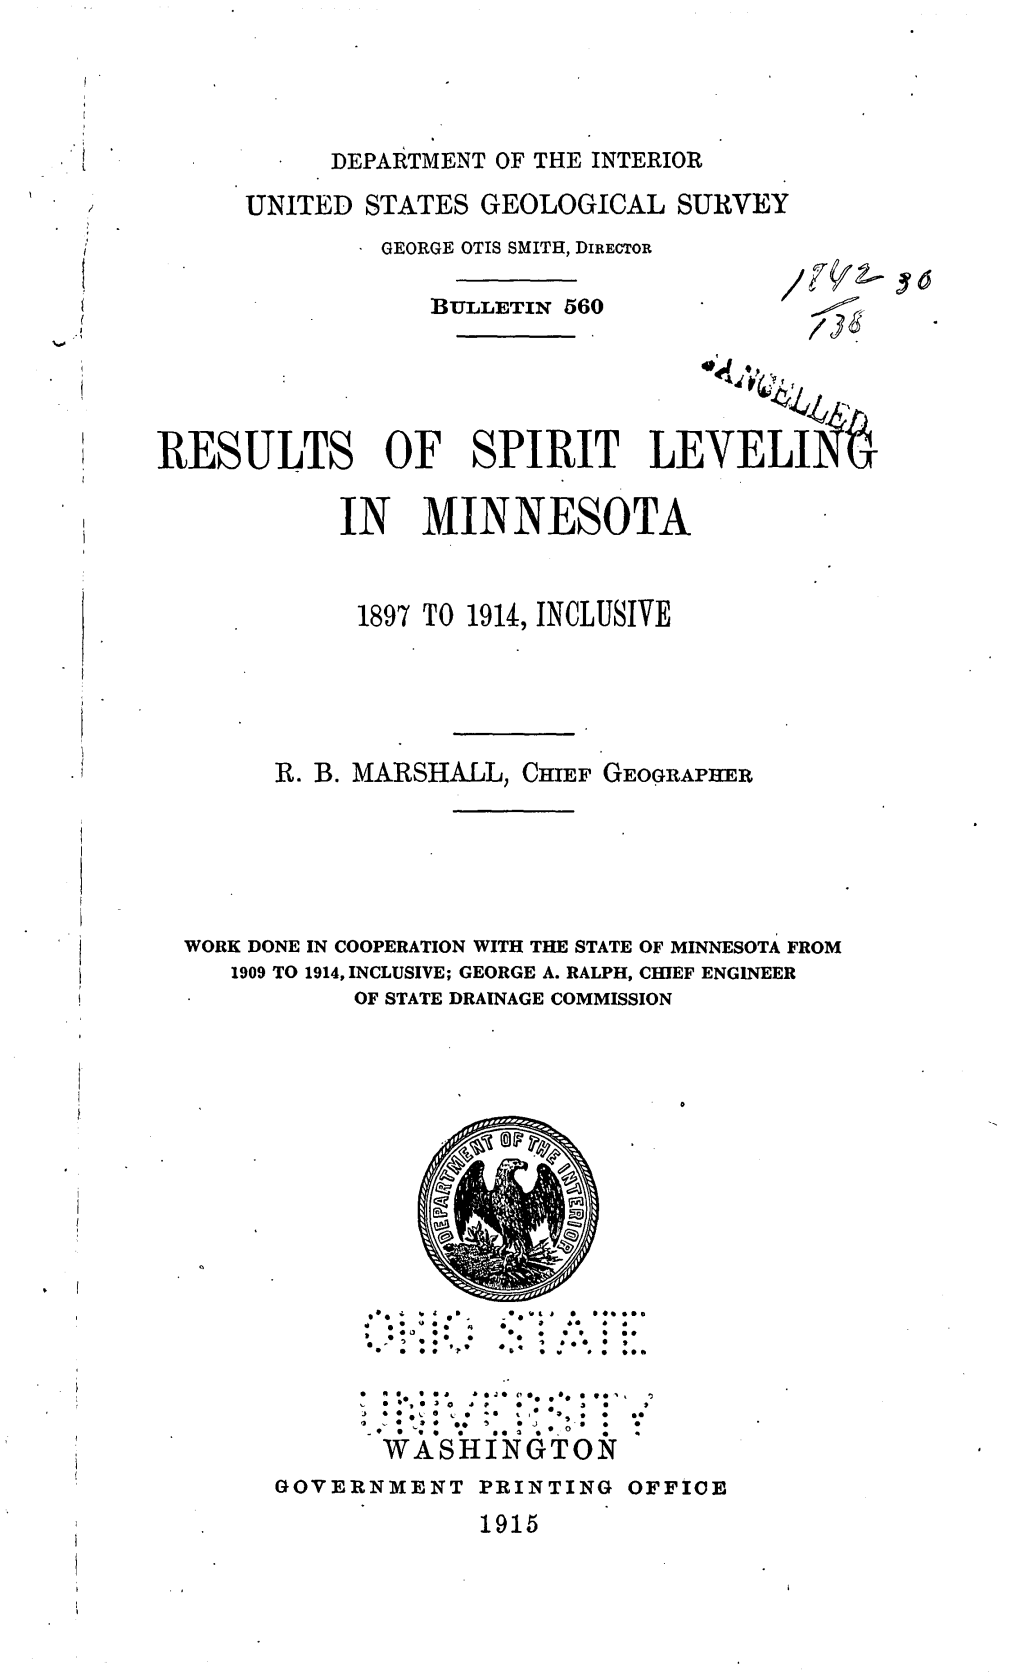 Results of Spirit Leveli in Minnesota